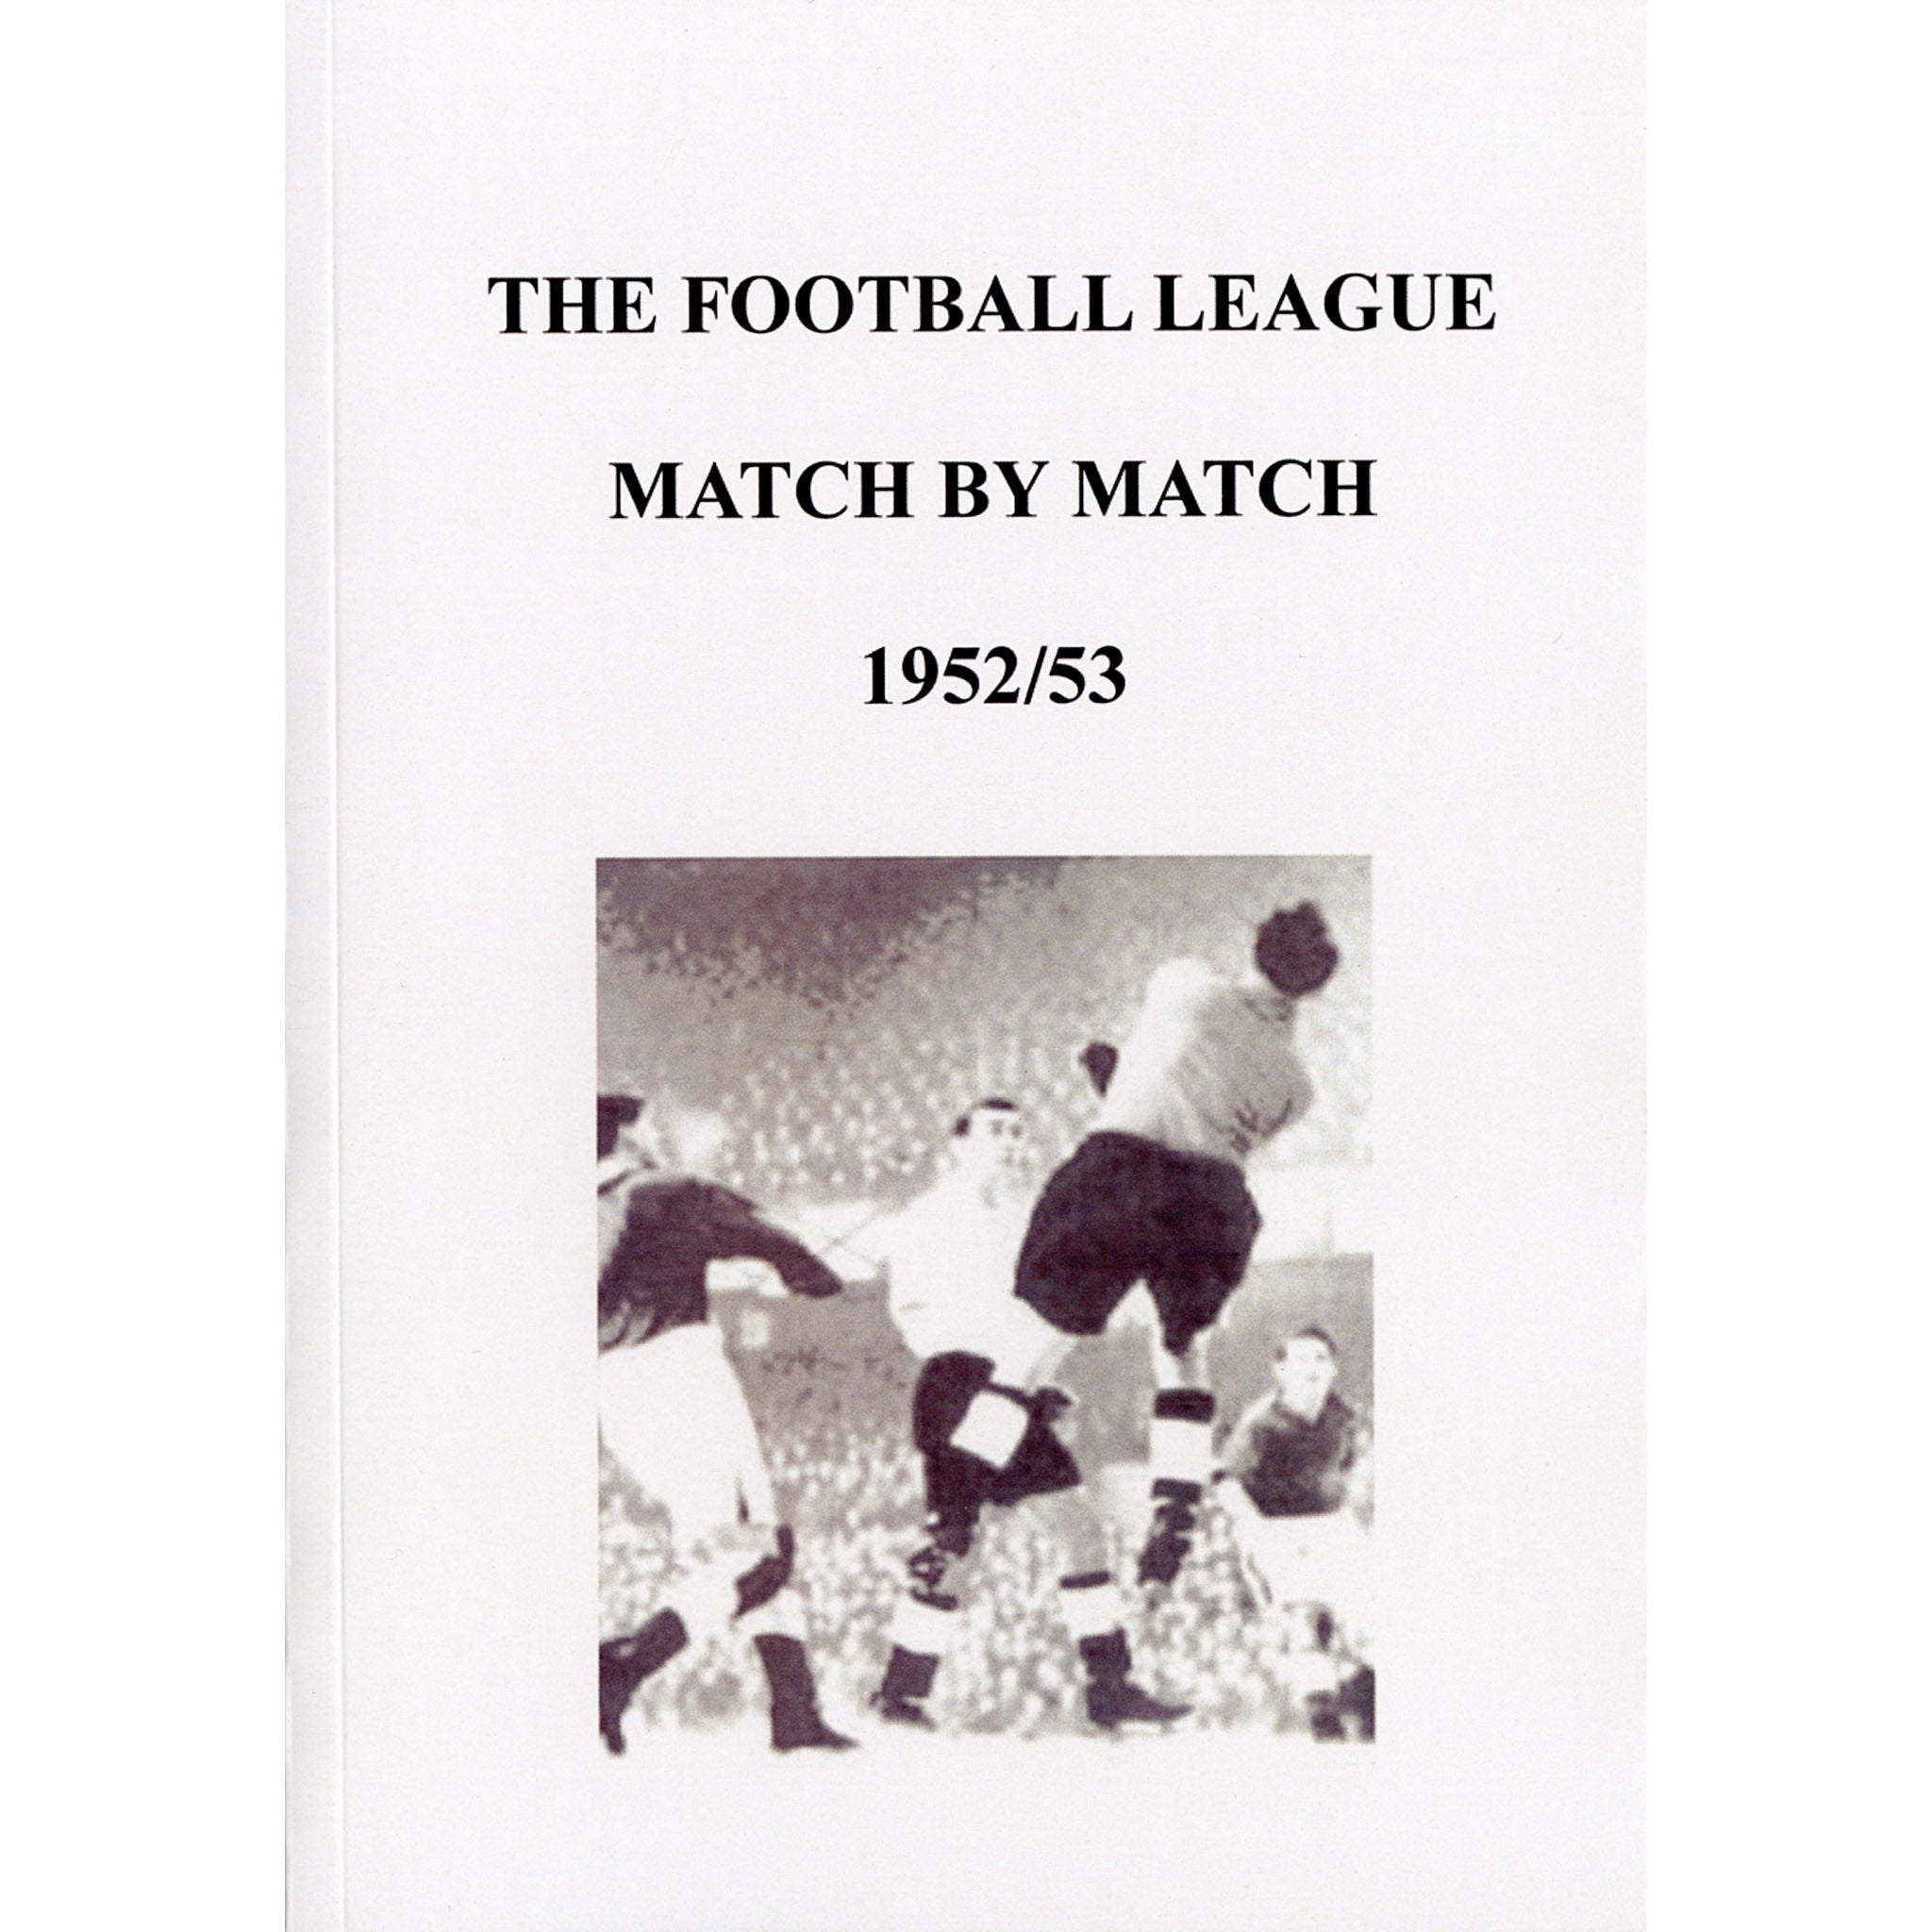 The Football League Match By Match 1952/53